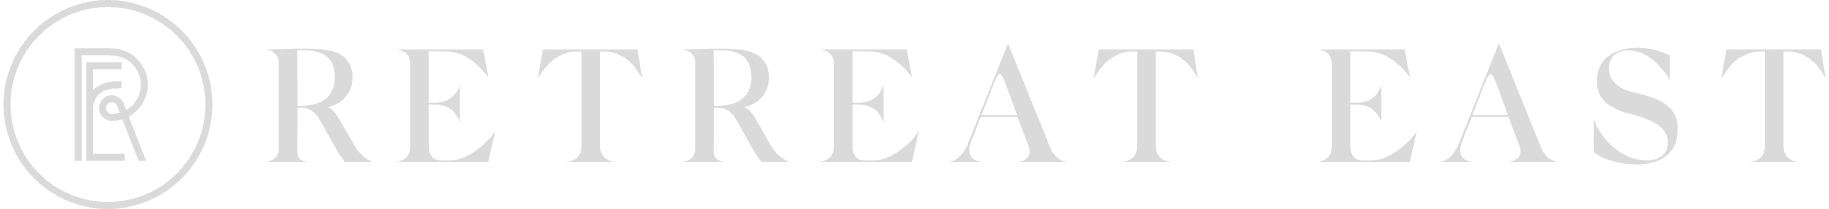 Retreat East's logo